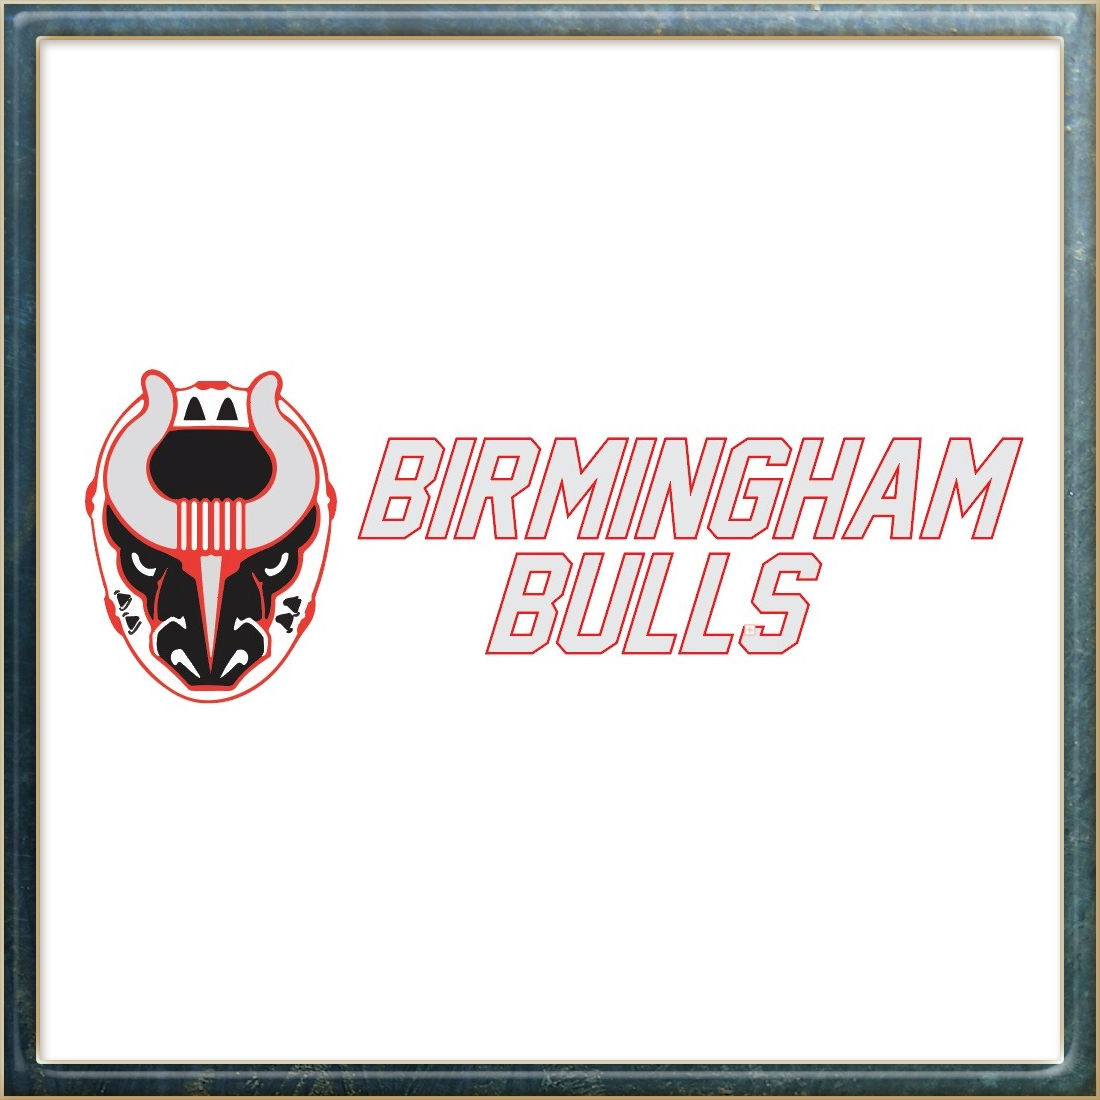 Meet the 2017-18 Birmingham Bulls hockey team 